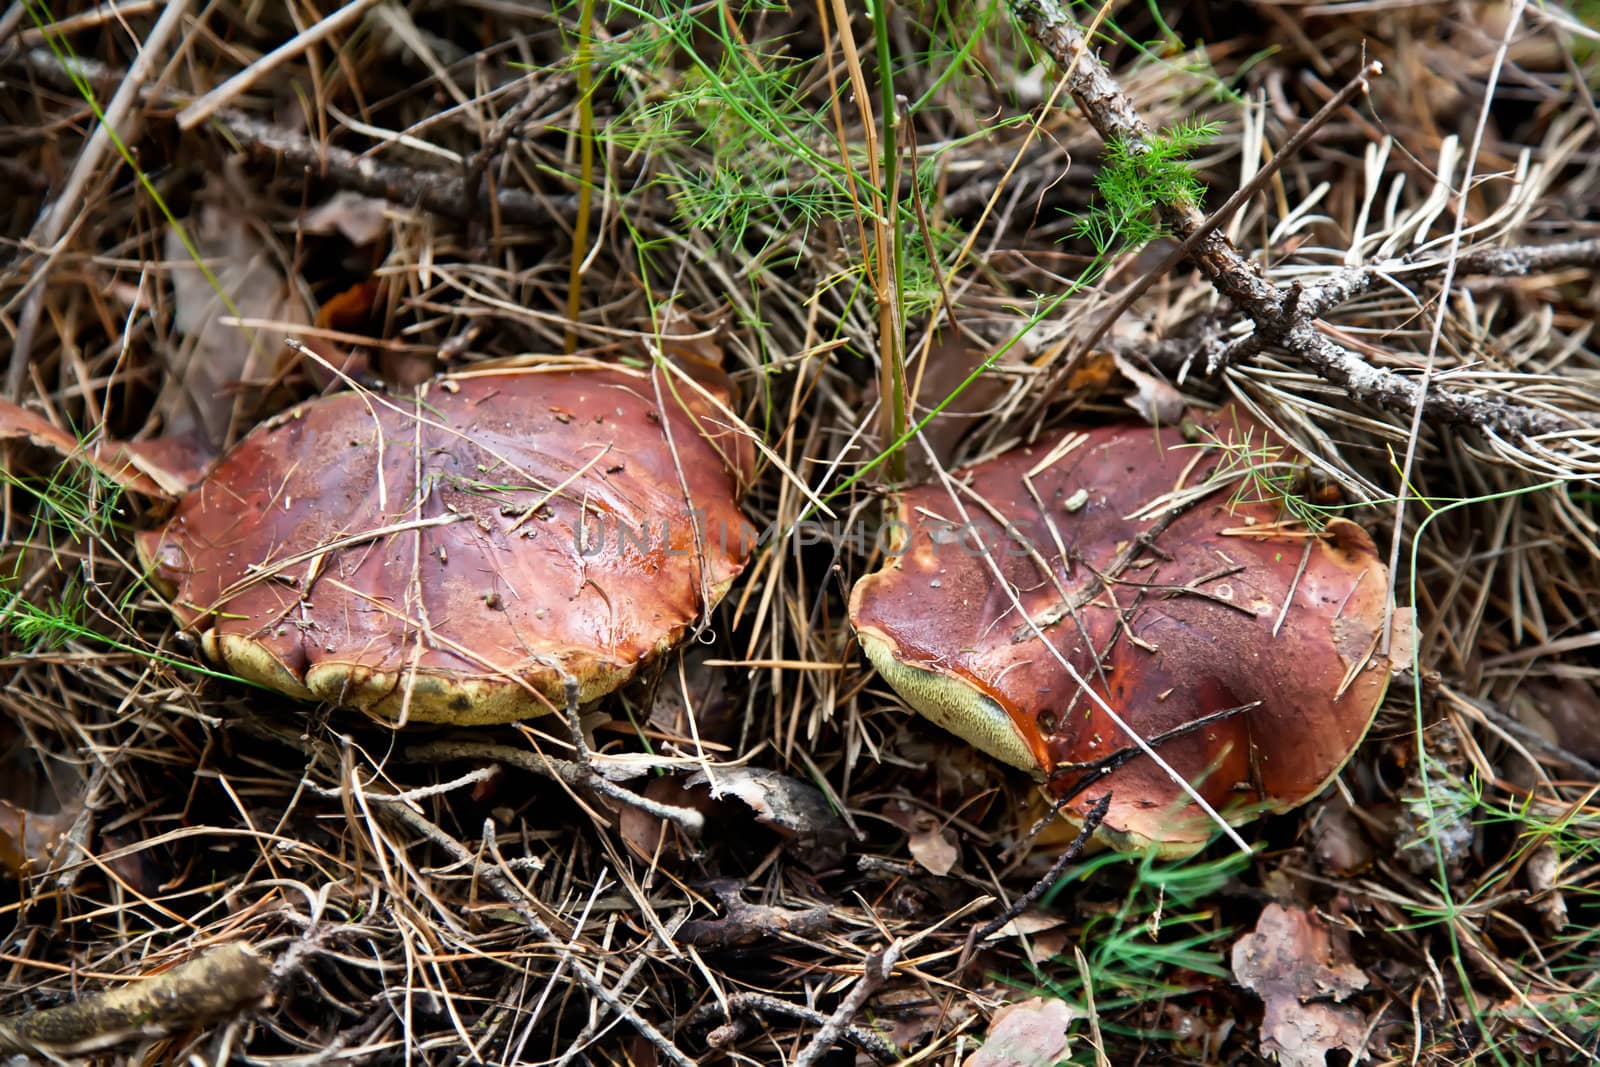 Pair of brown cap boletus mushroom in autumn forest by RawGroup